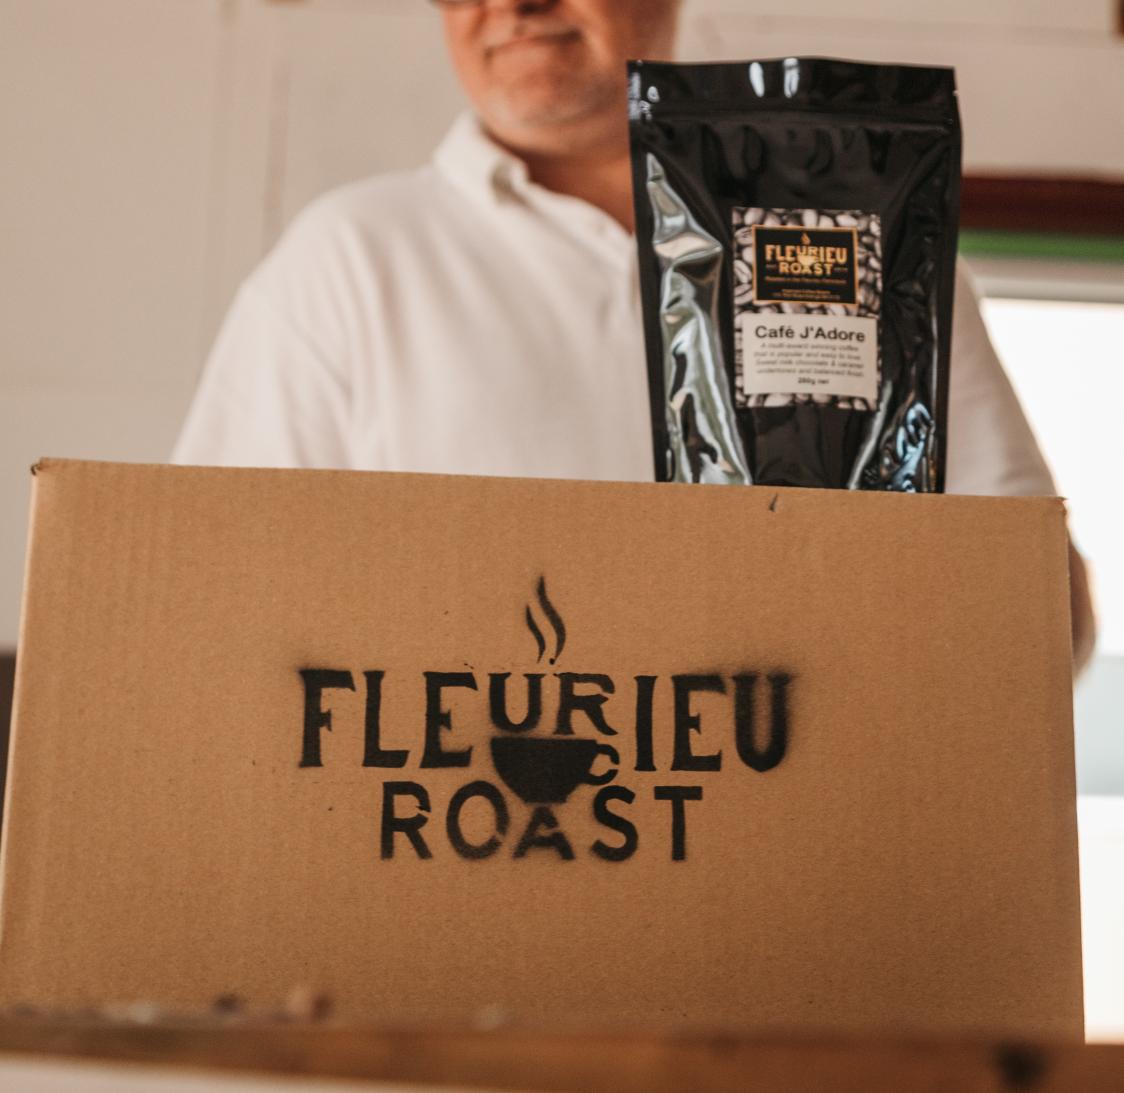 Packing bags of Fleurieu Roast coffee